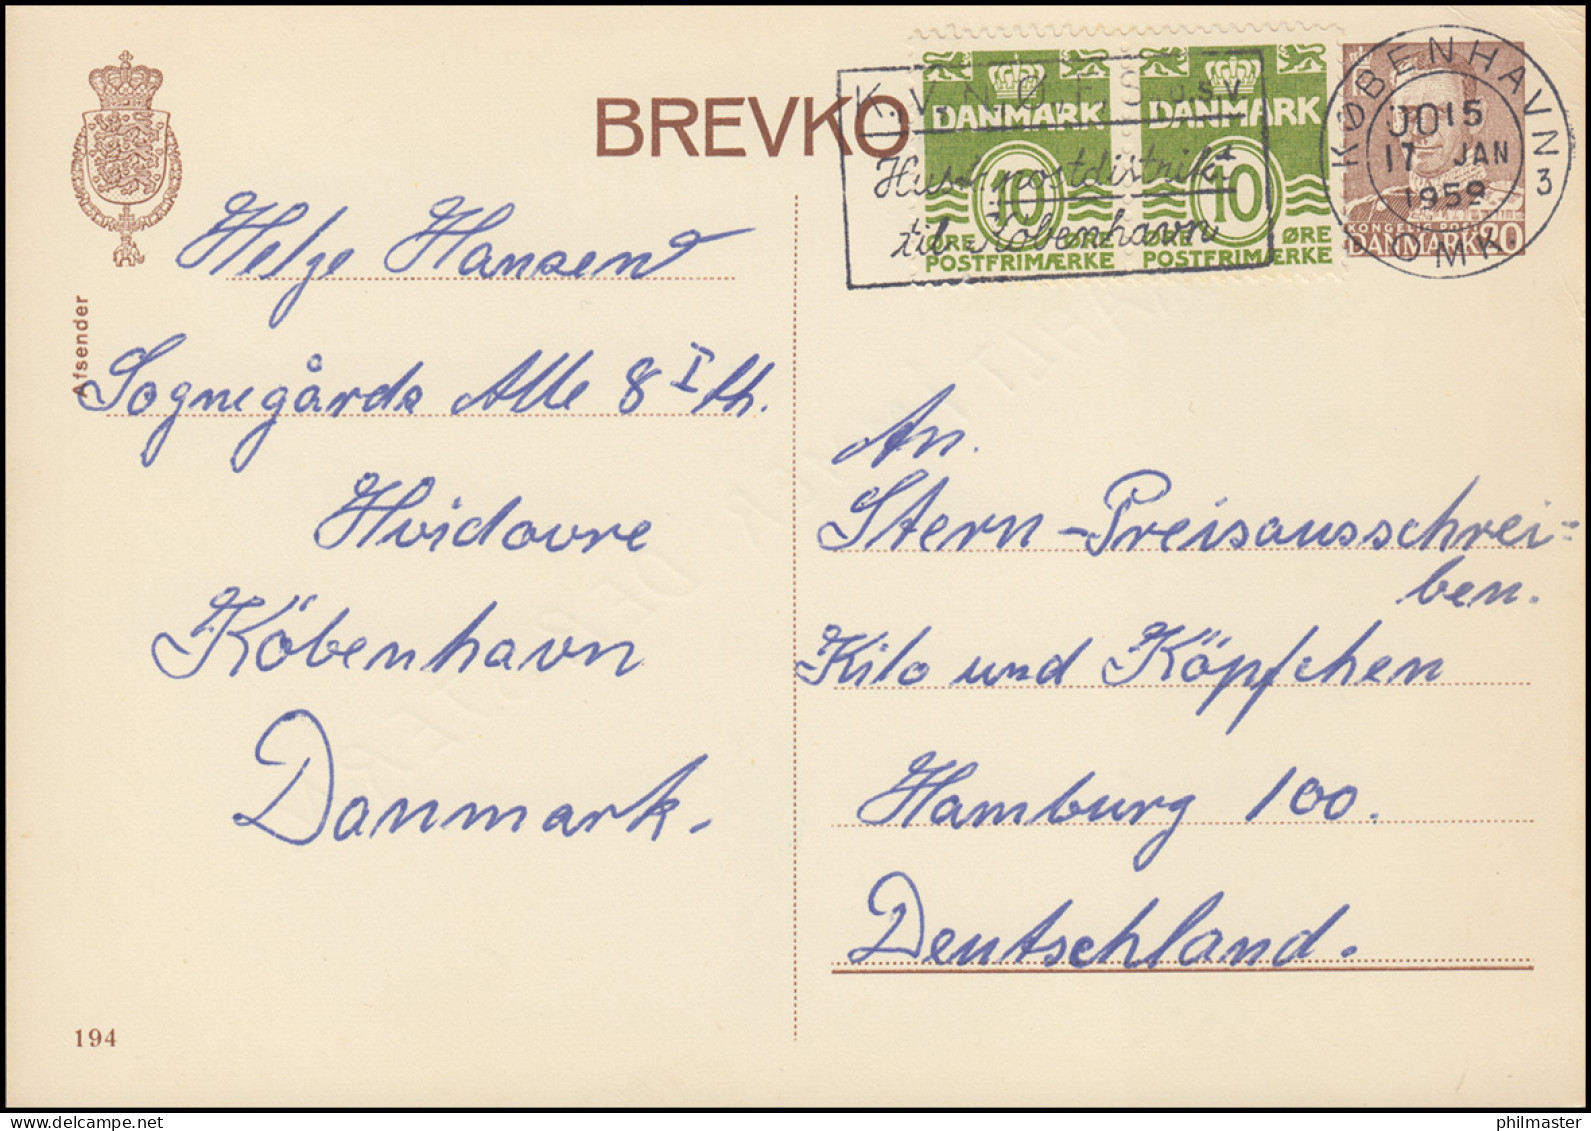 Dänemark Postkarte P 243II Frederik IX. 20 Öre, Kz. 194, KØBENHAVN 17.1.1959 - Ganzsachen